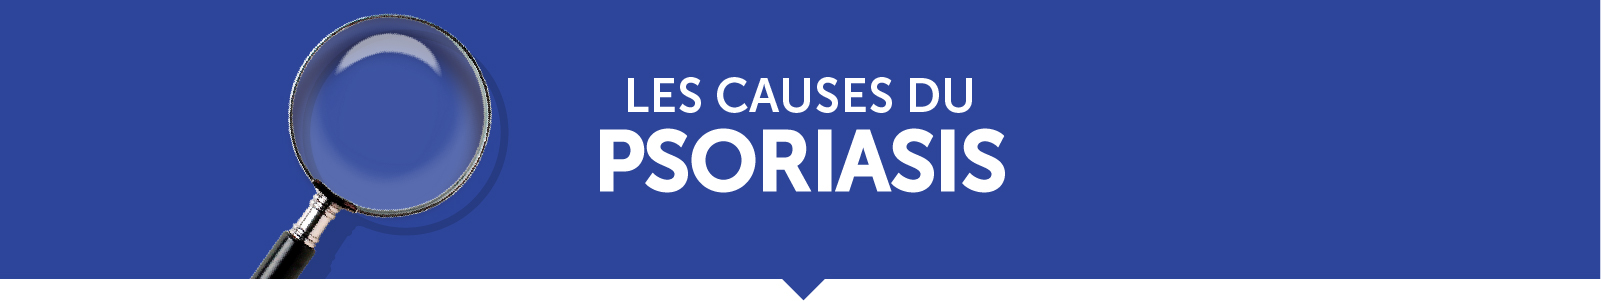 Les causes du psoriasis